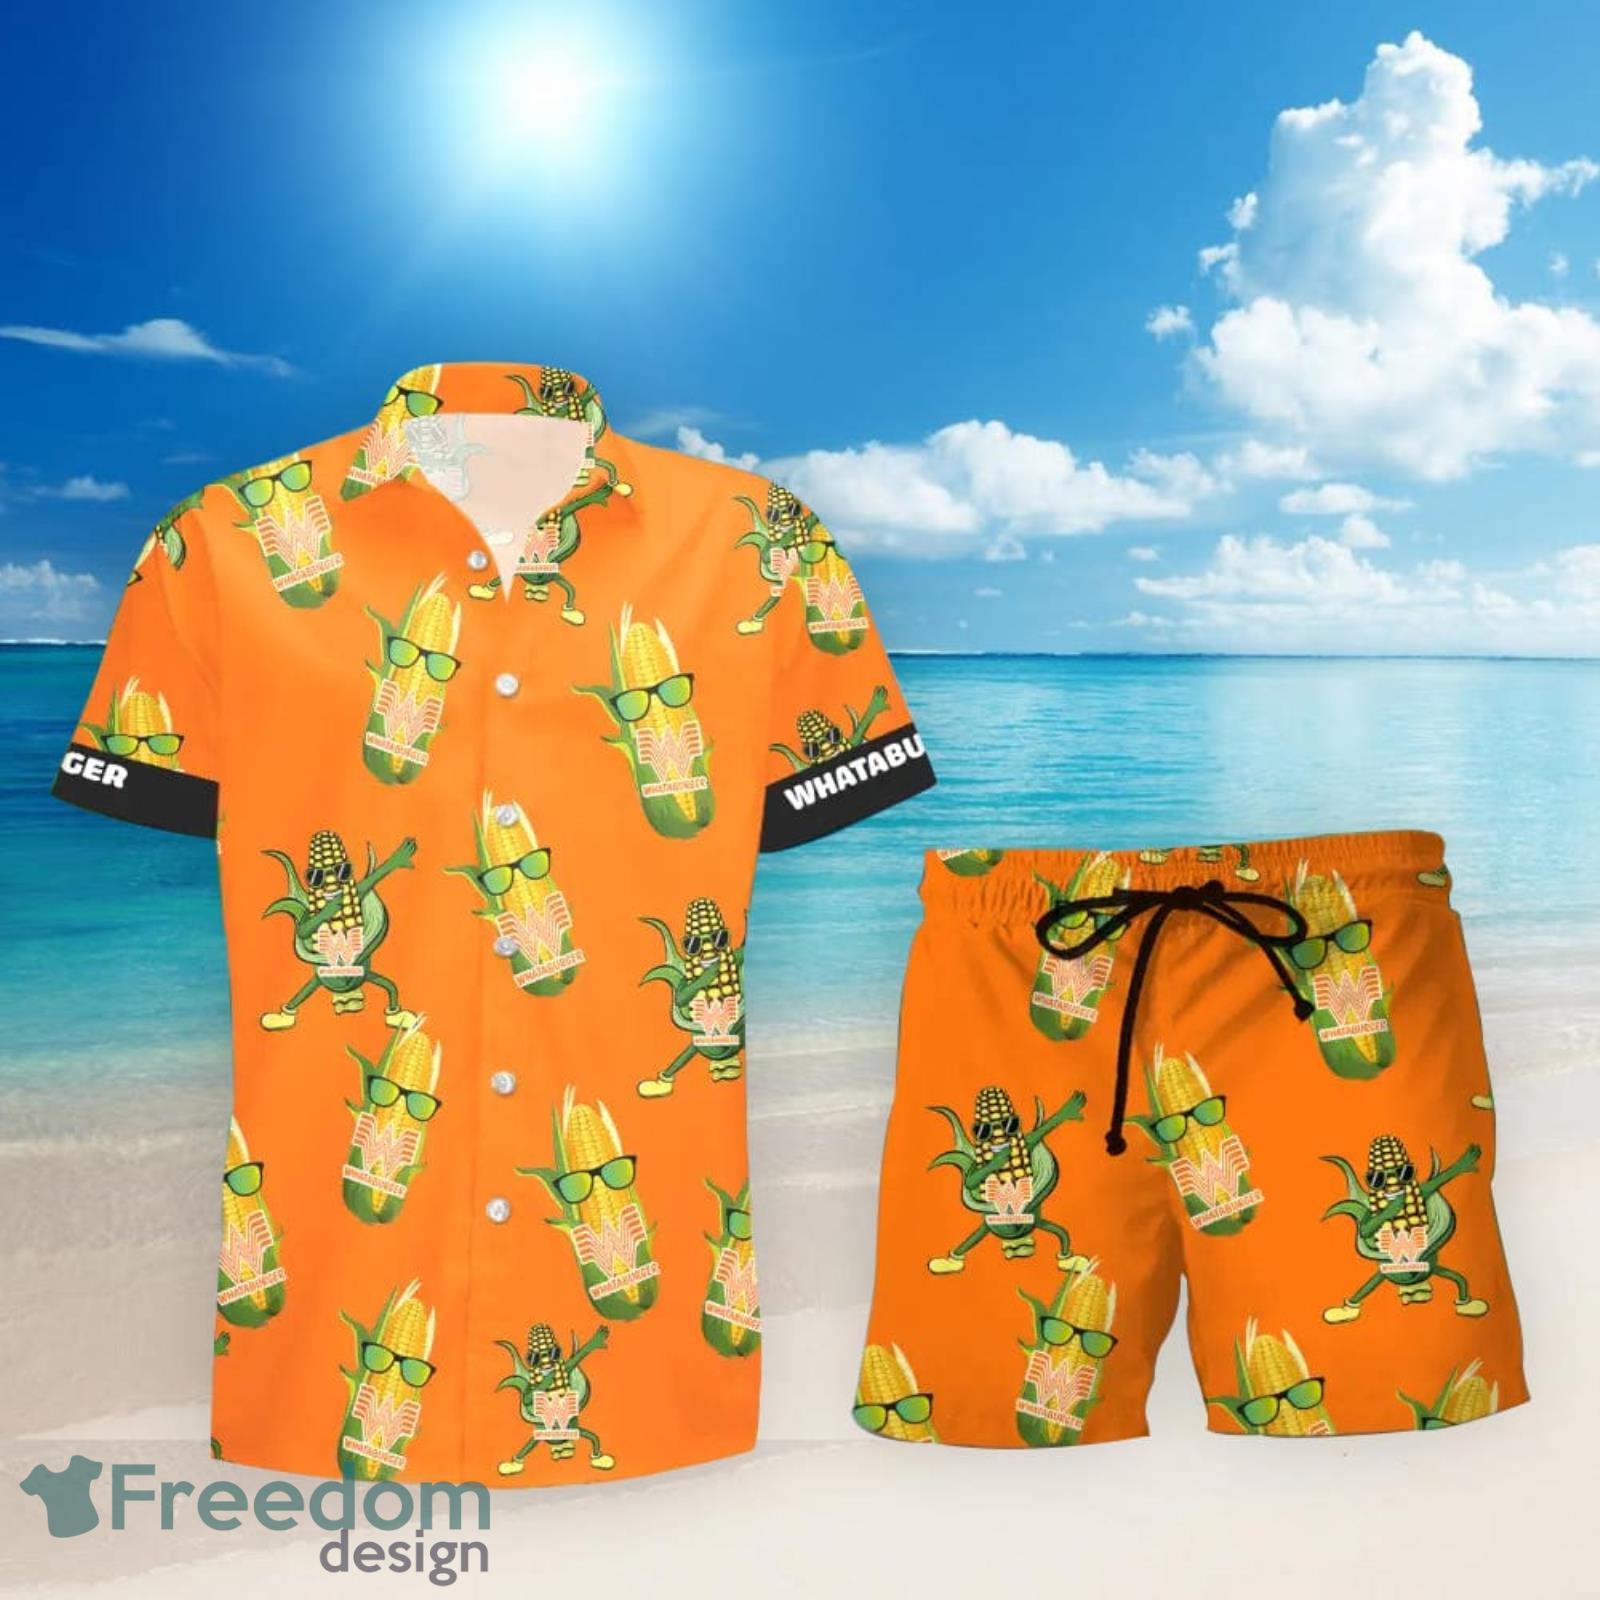 Whataburger Hawaiian Shirt - RaraPrints